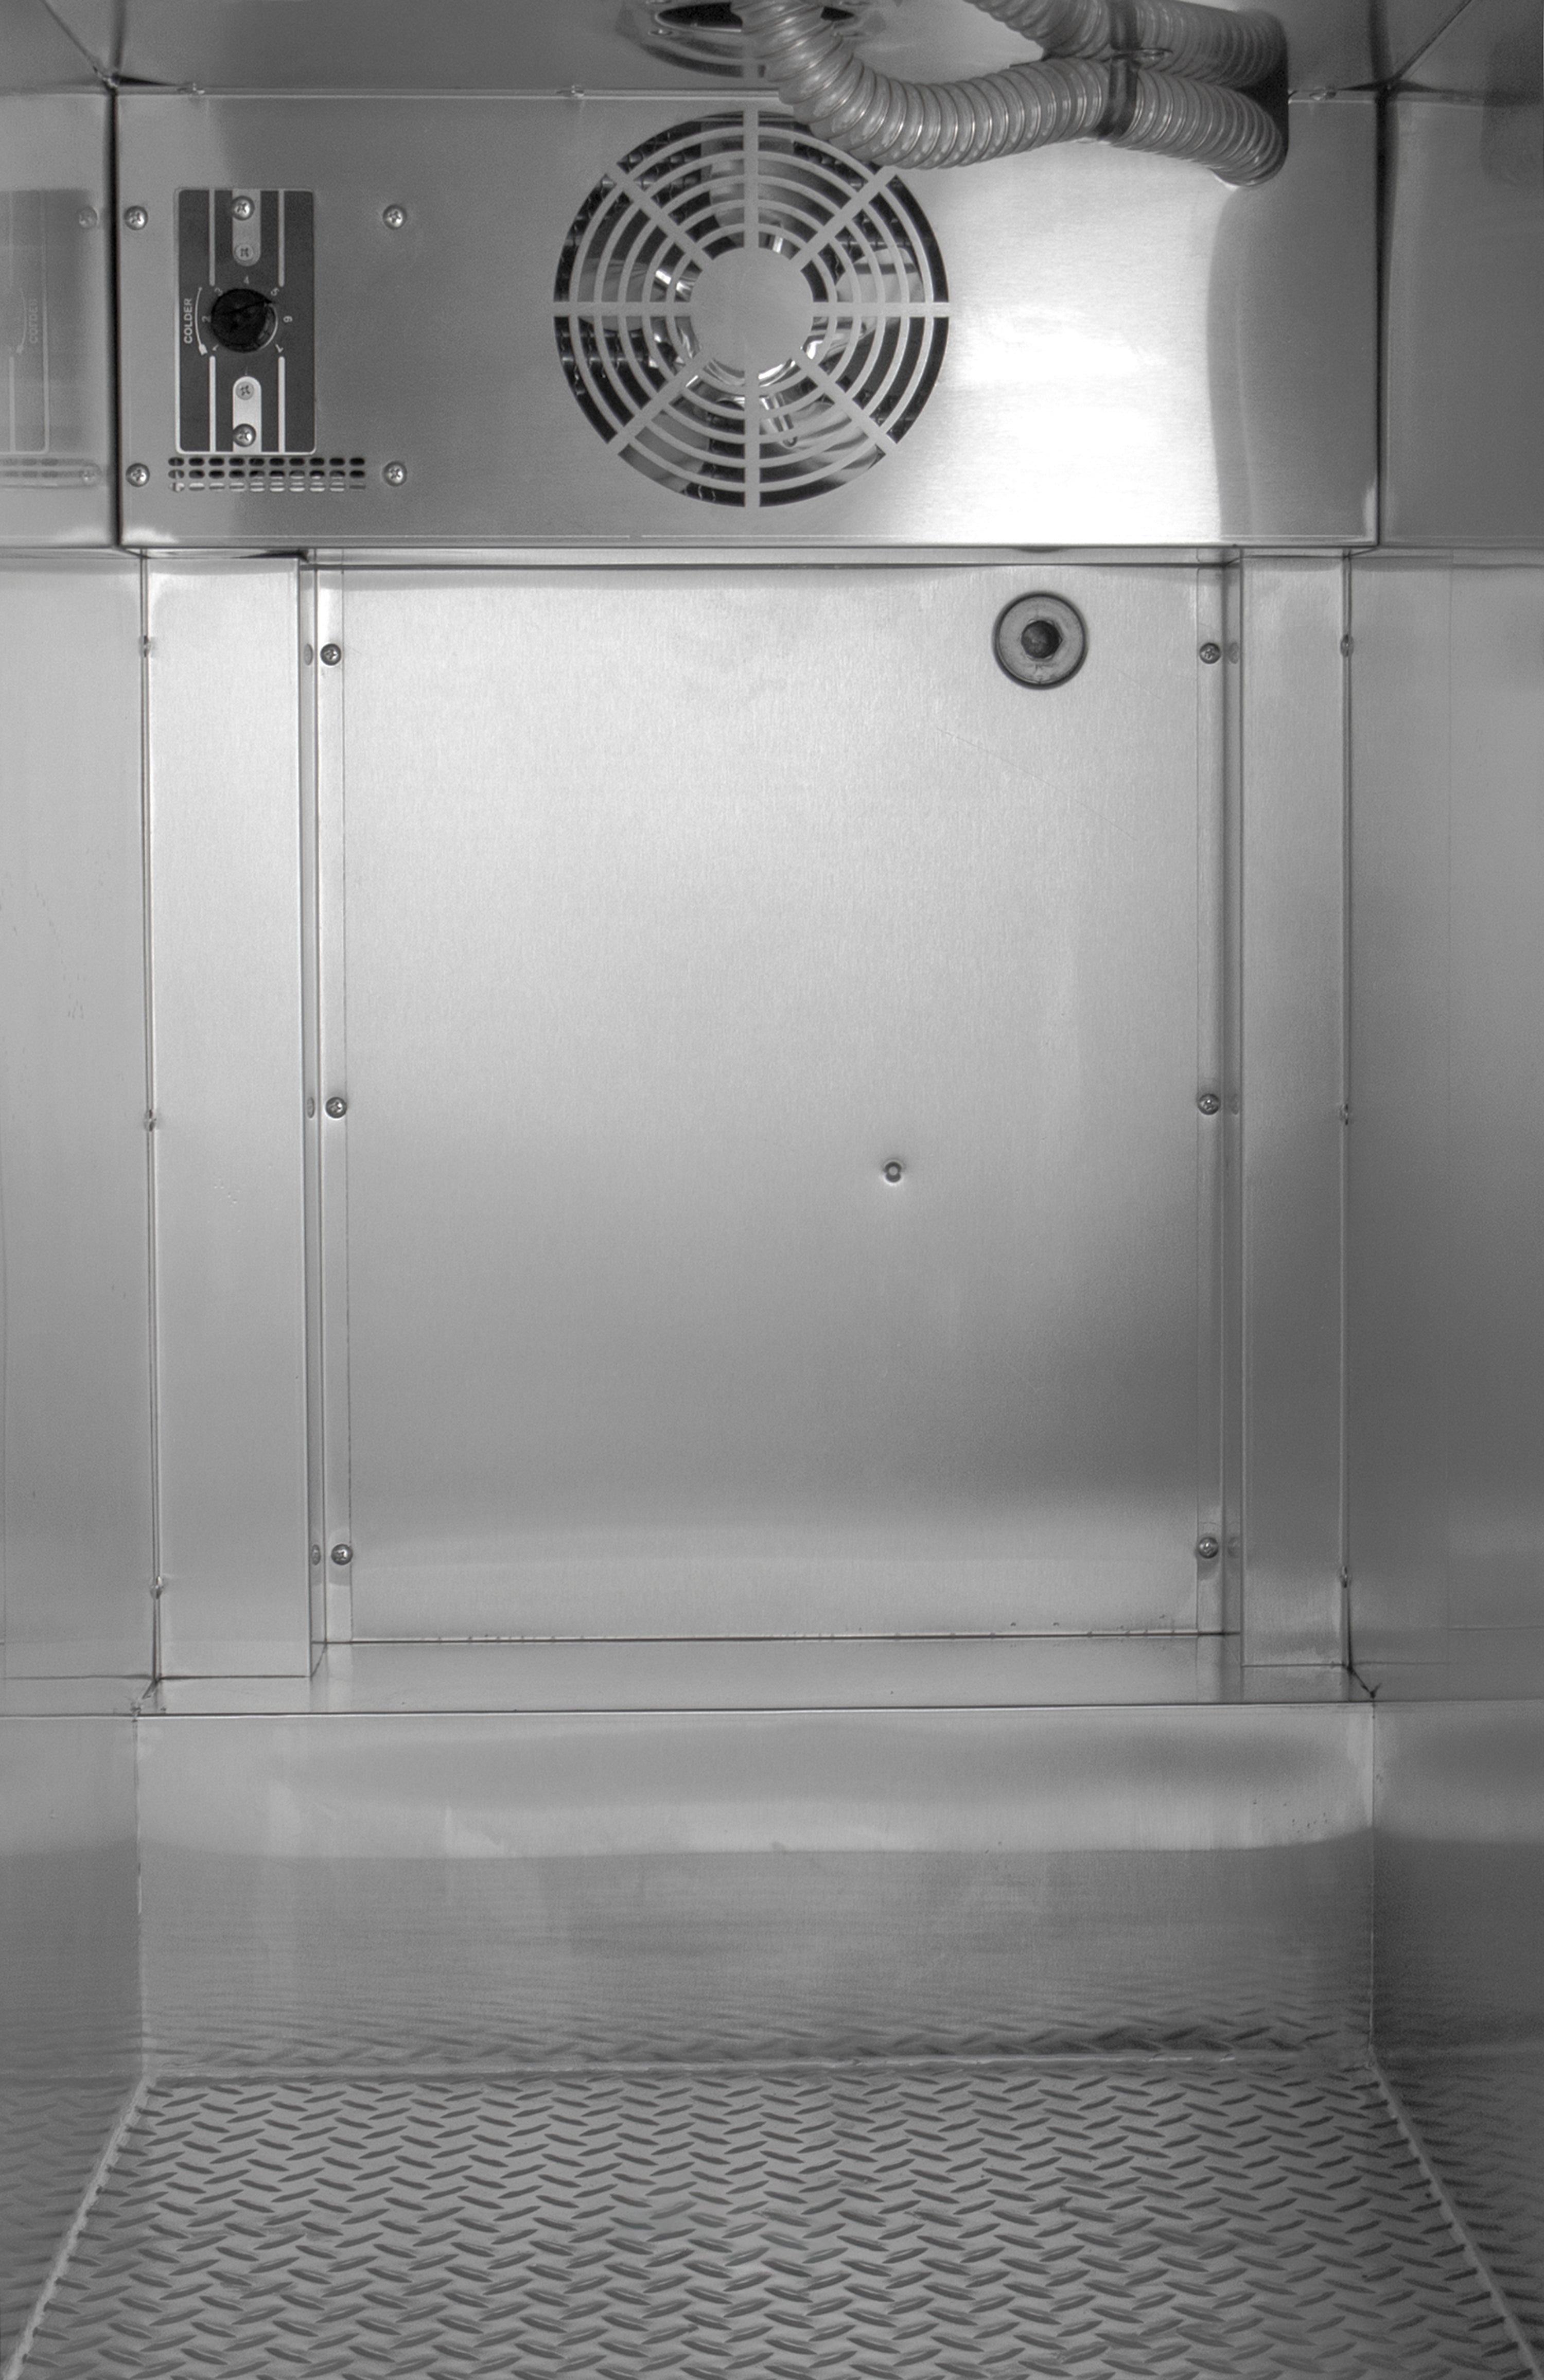 Four Faucet Commercial Kegerator Iced Coffee Keg Dispenser Black